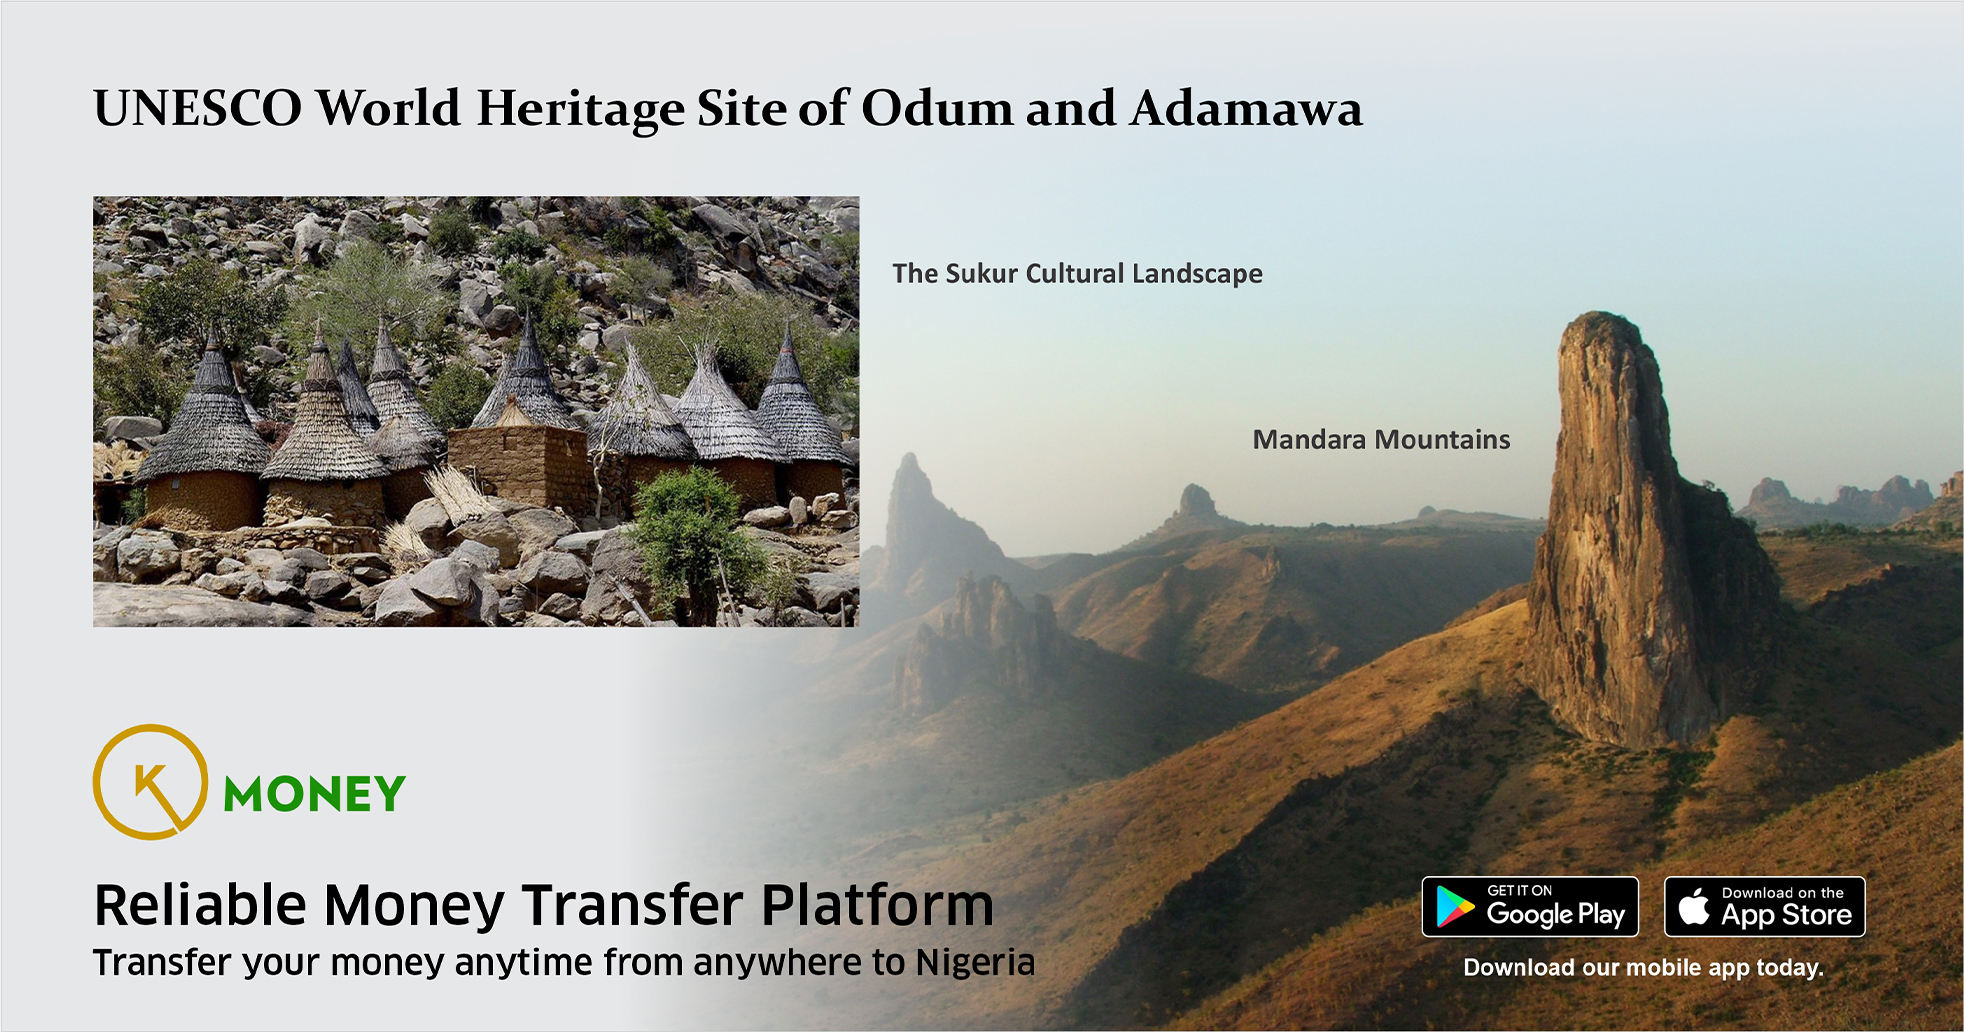 UNESCO world heritage sites of Odum and Adamawa